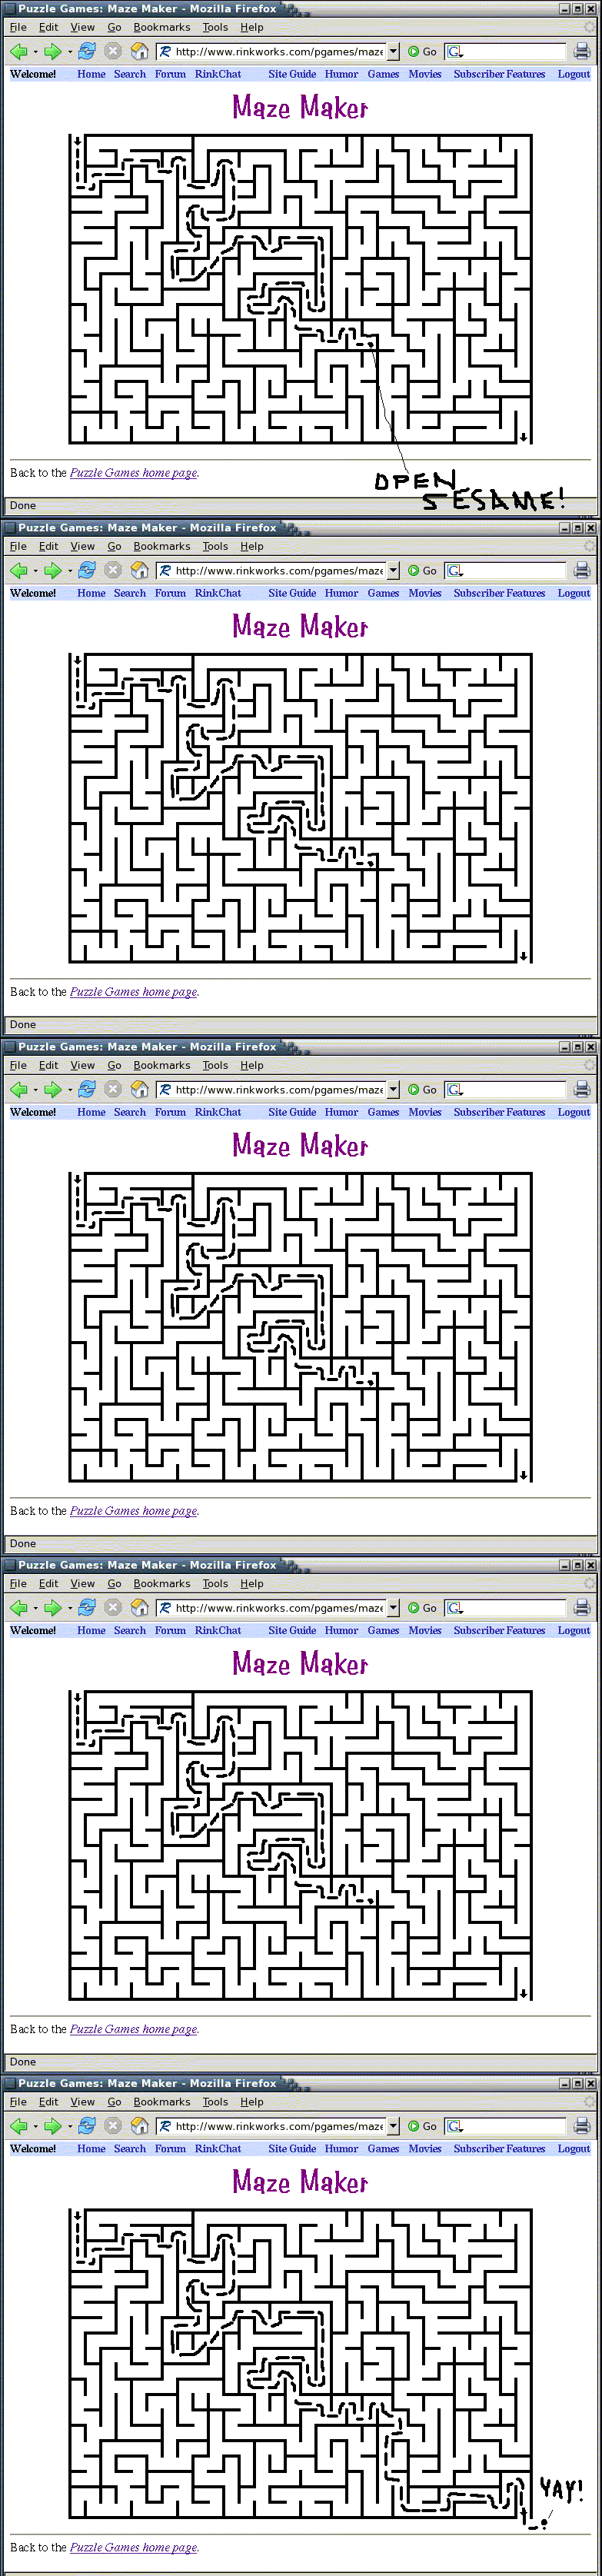 Maze Solution #7